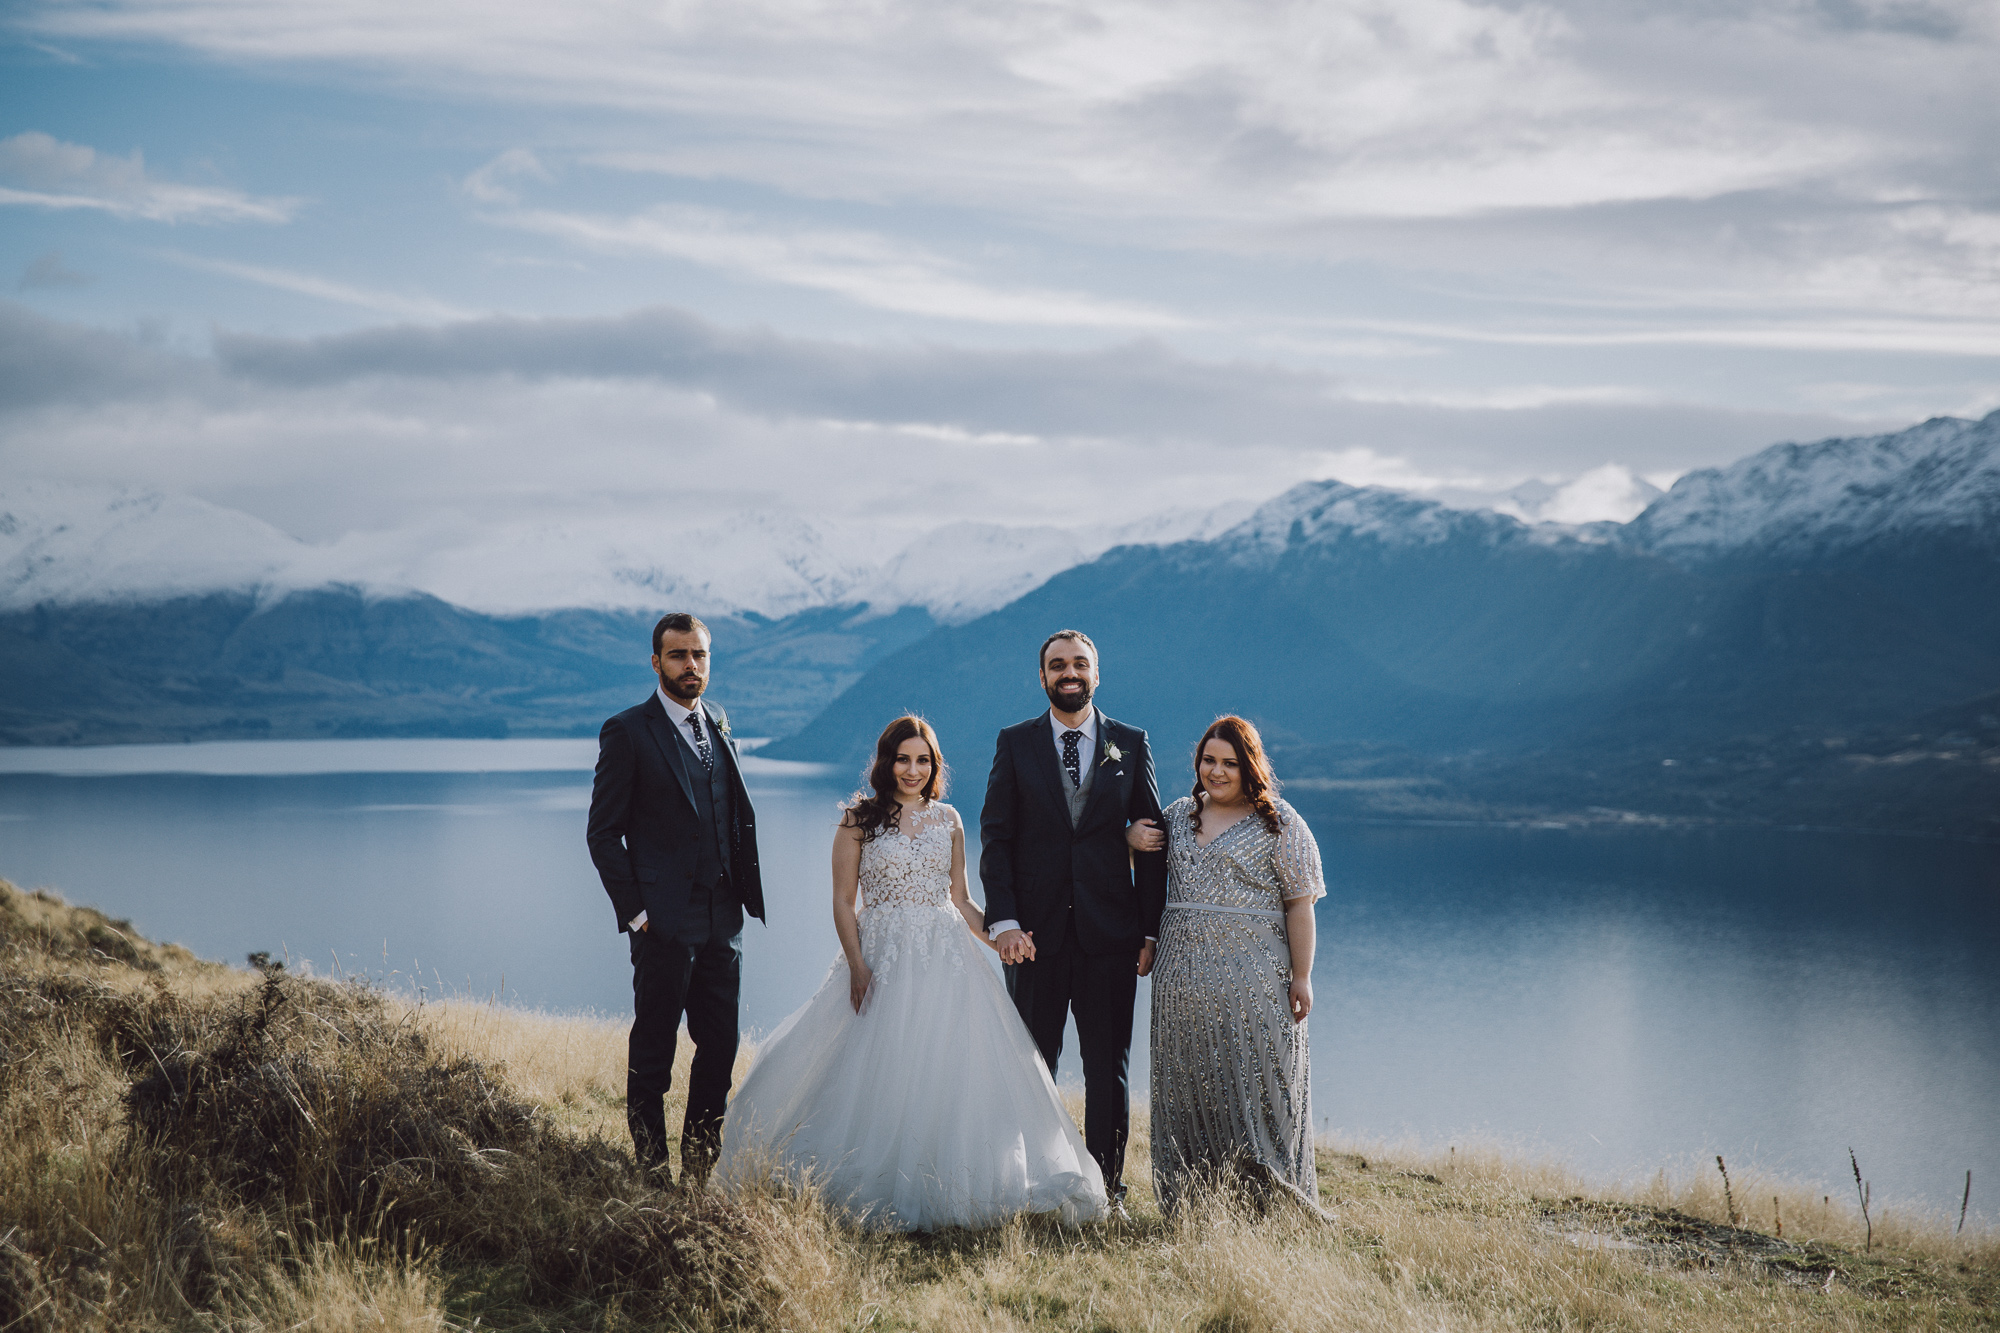 Mountain top wedding photos in Queenstown NZ